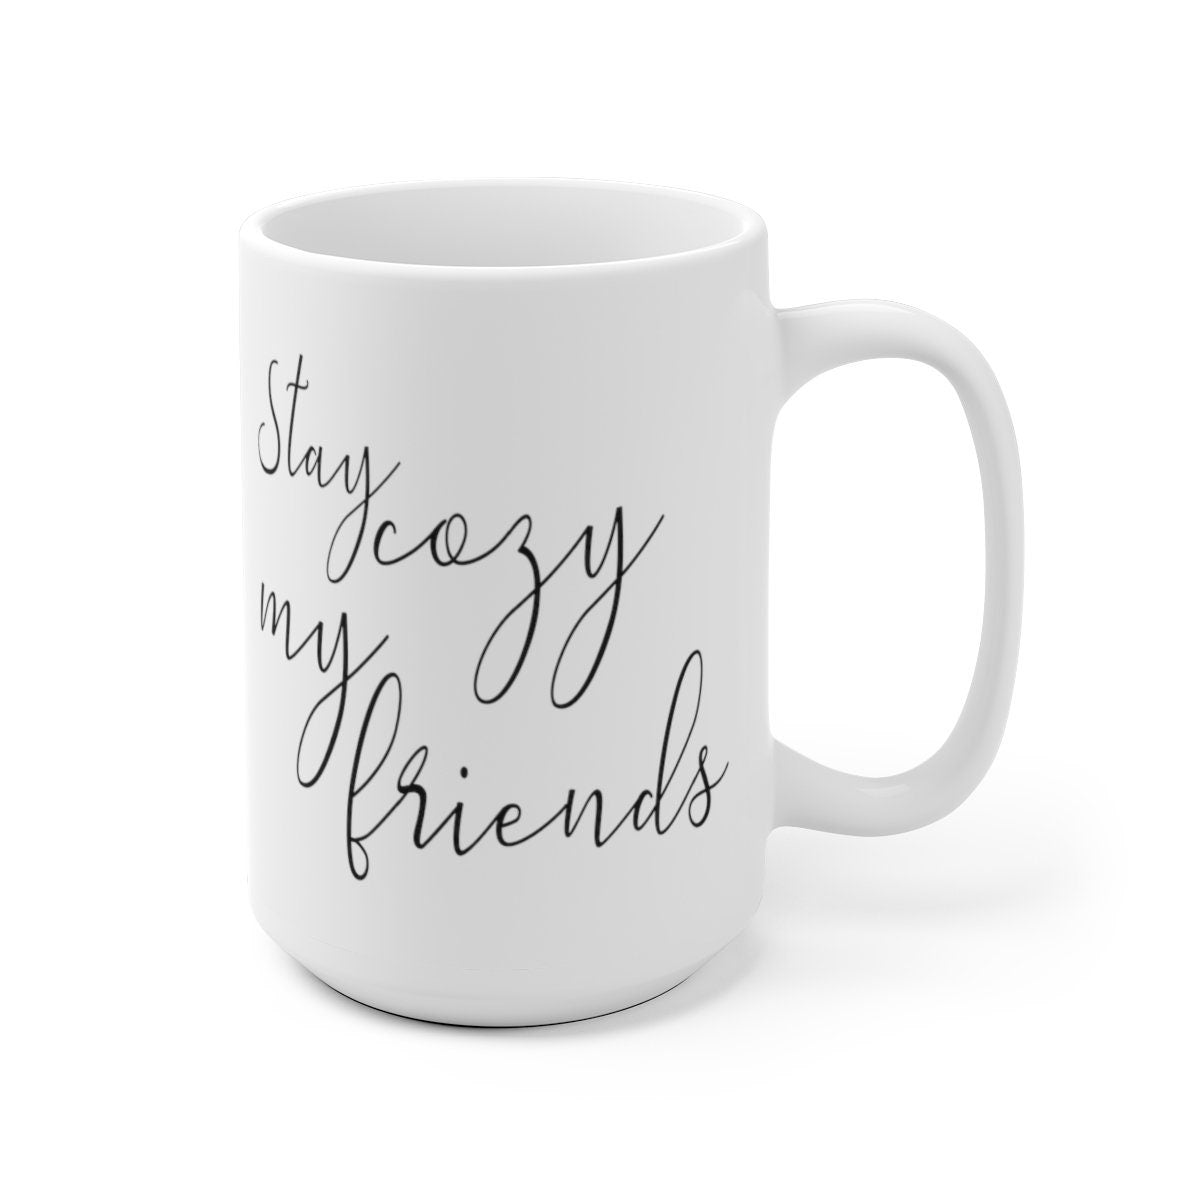 Stay Cozy My Friends Mug